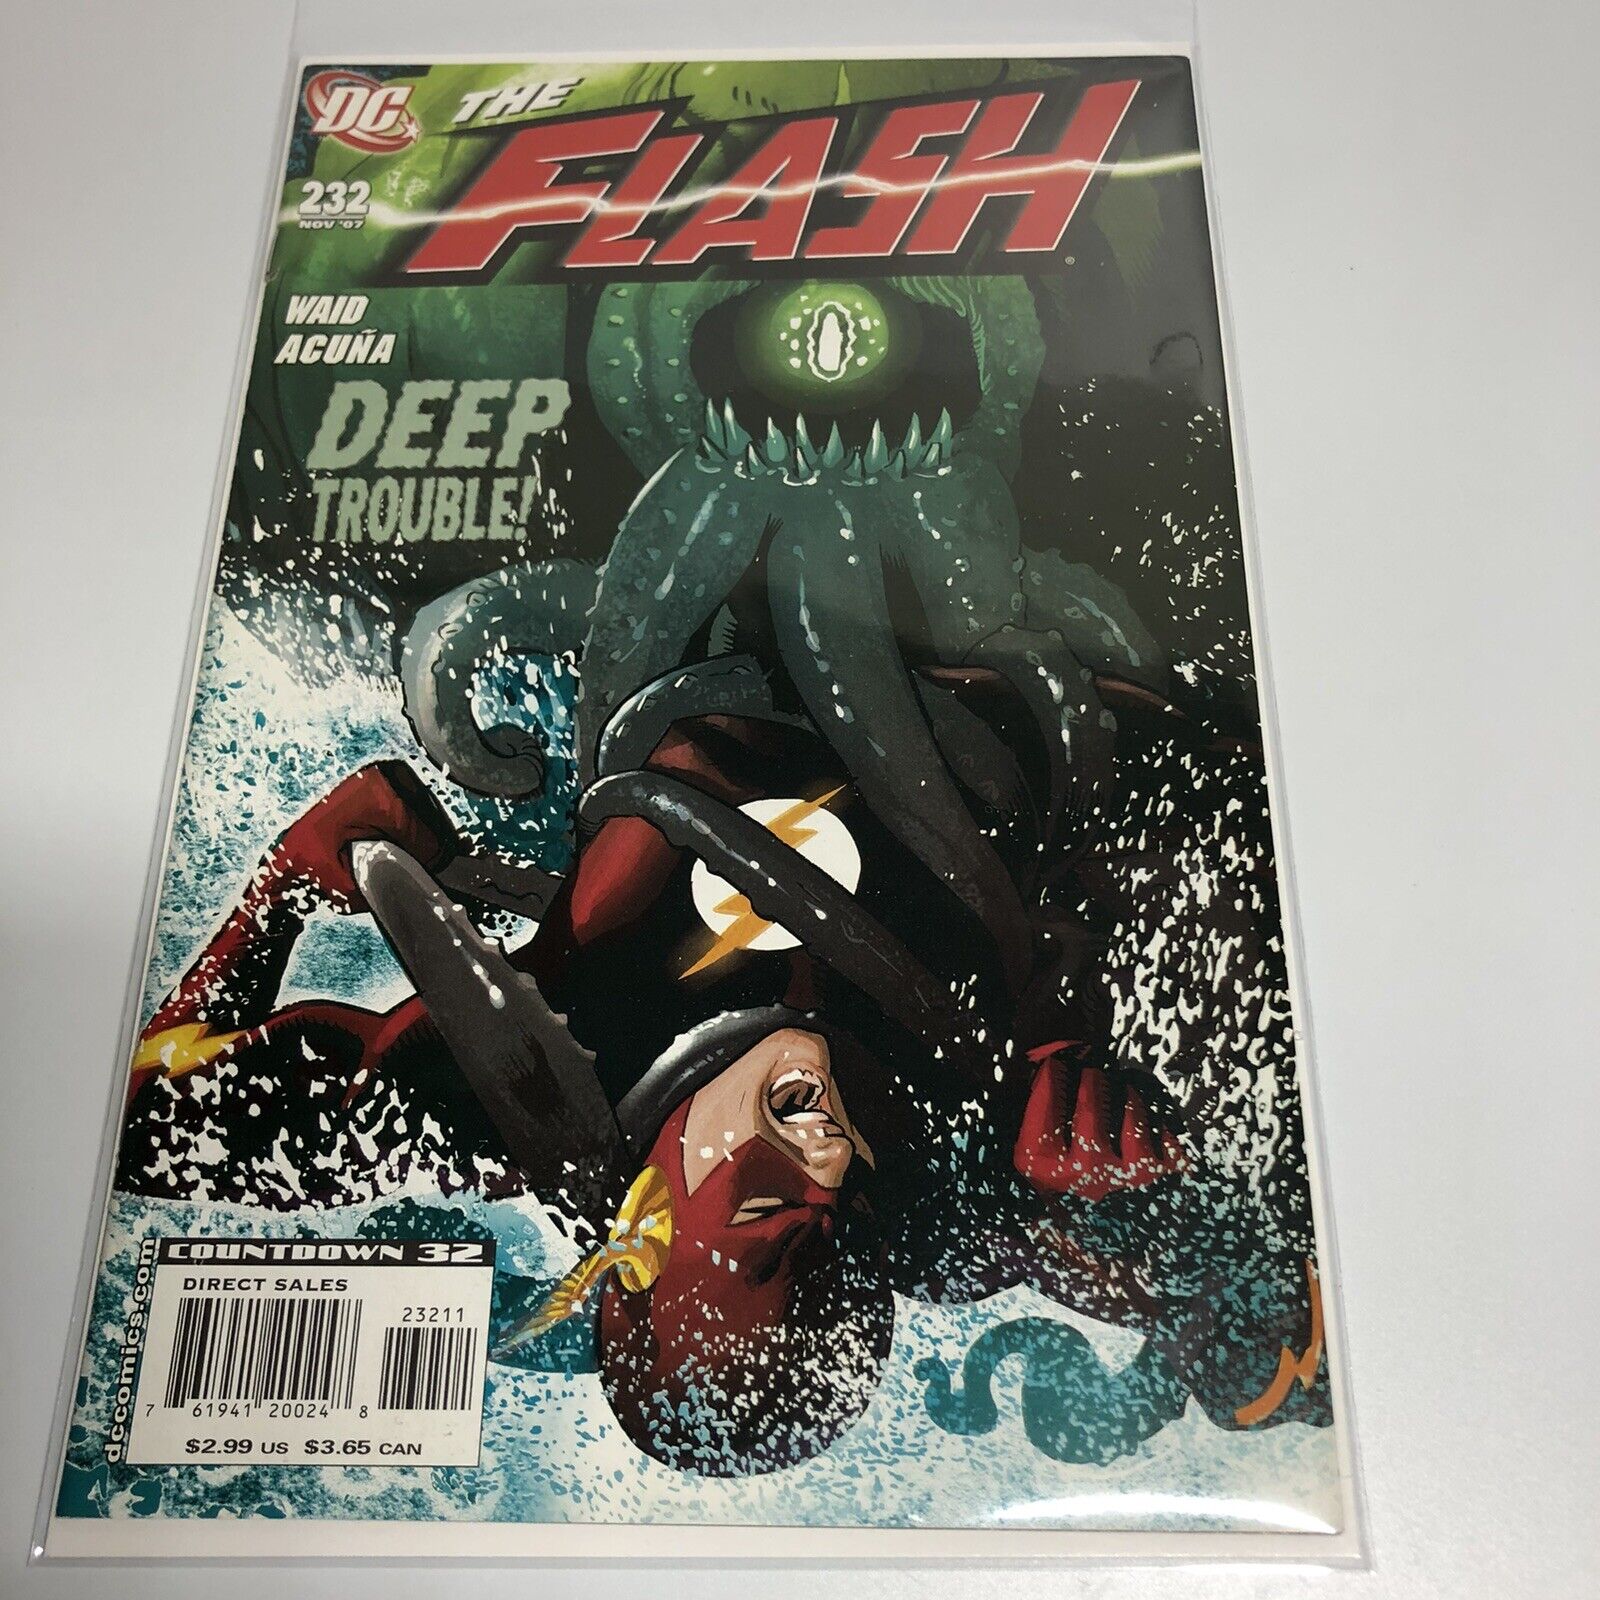 The Flash #232 (Nov. 2007) ”Deep Trouble”  DC Comics - Waid Acuna Art 